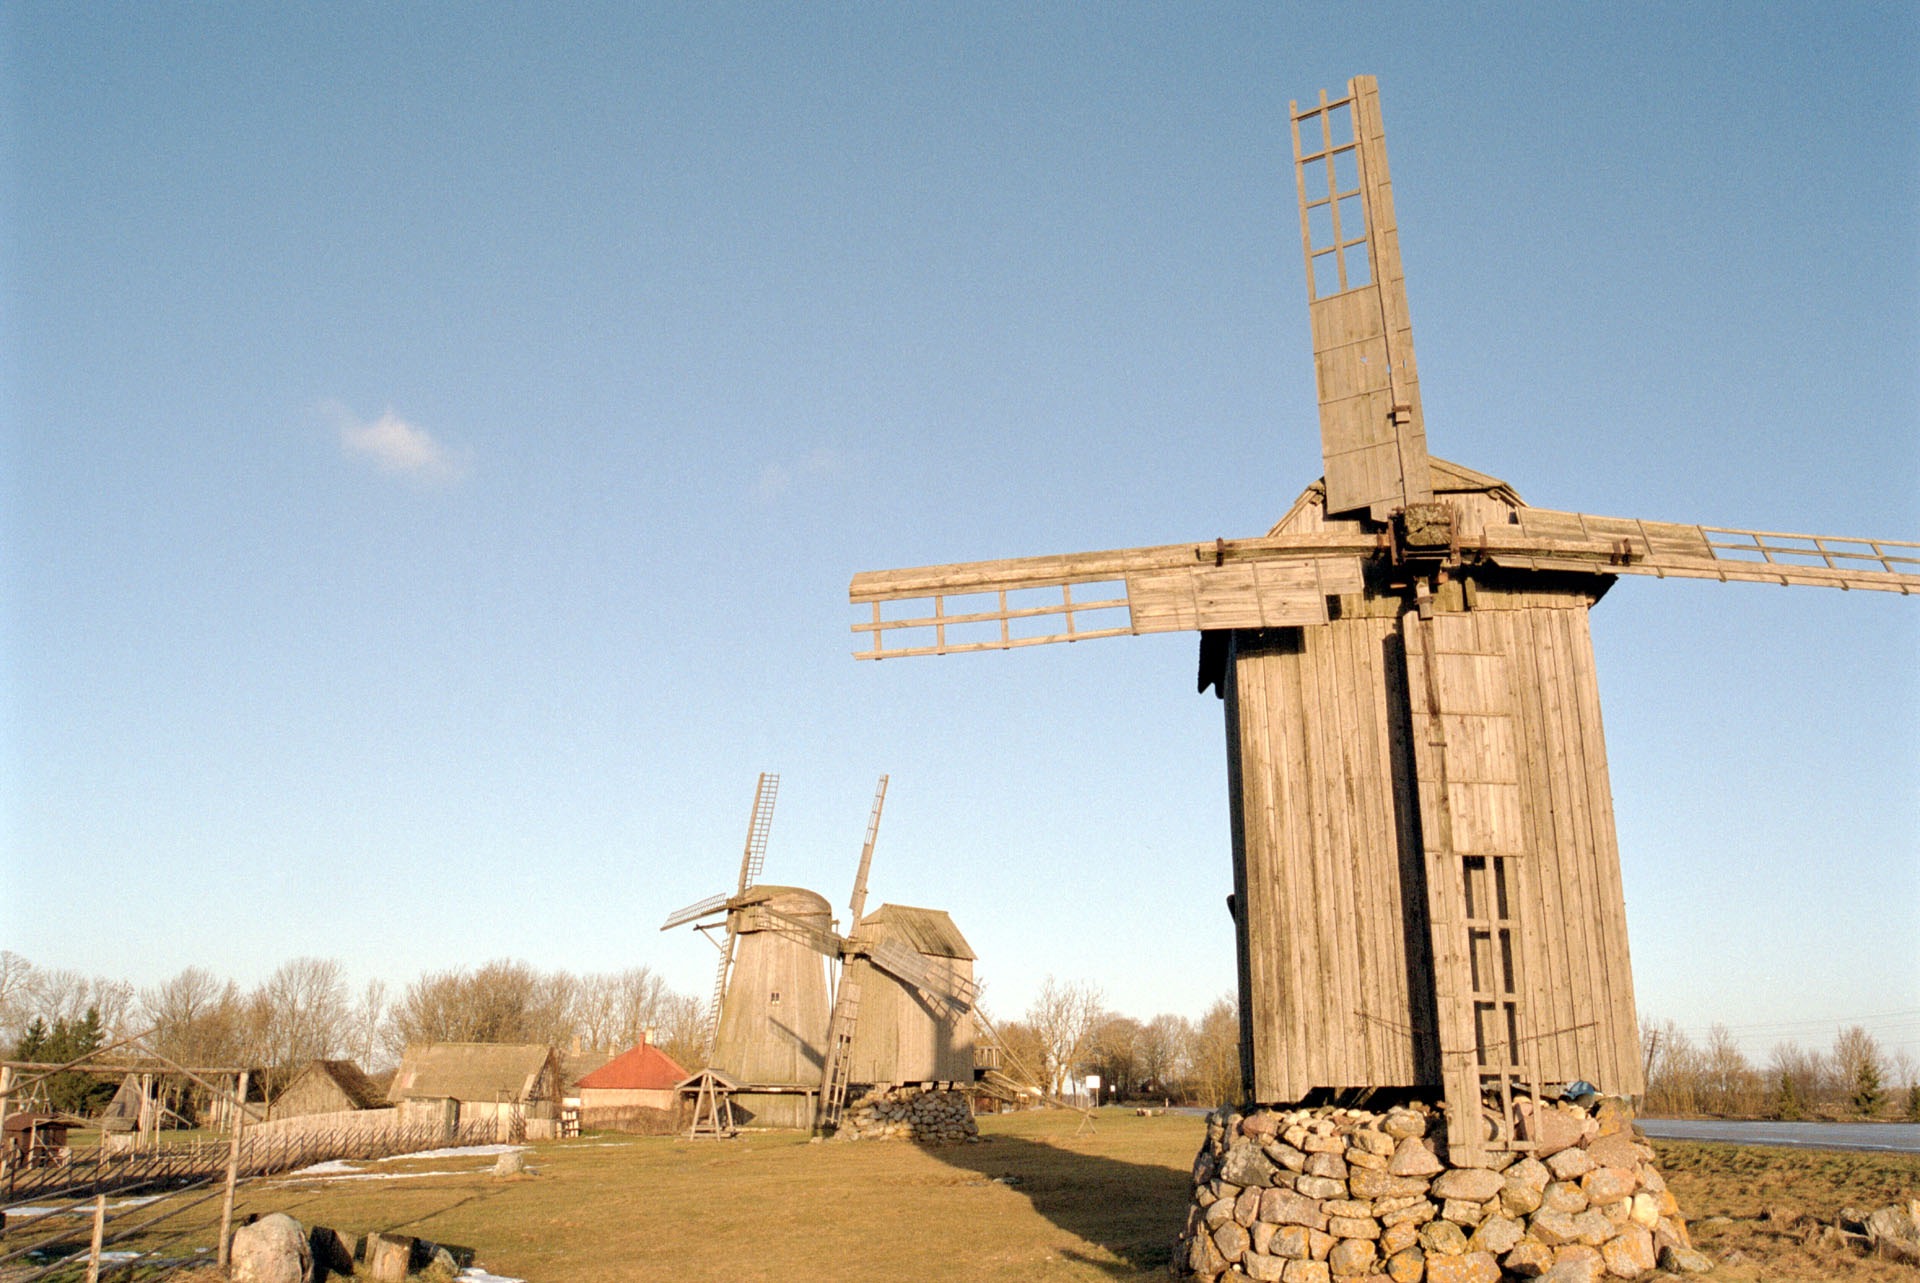 January 2006 - Latvia and Estonia